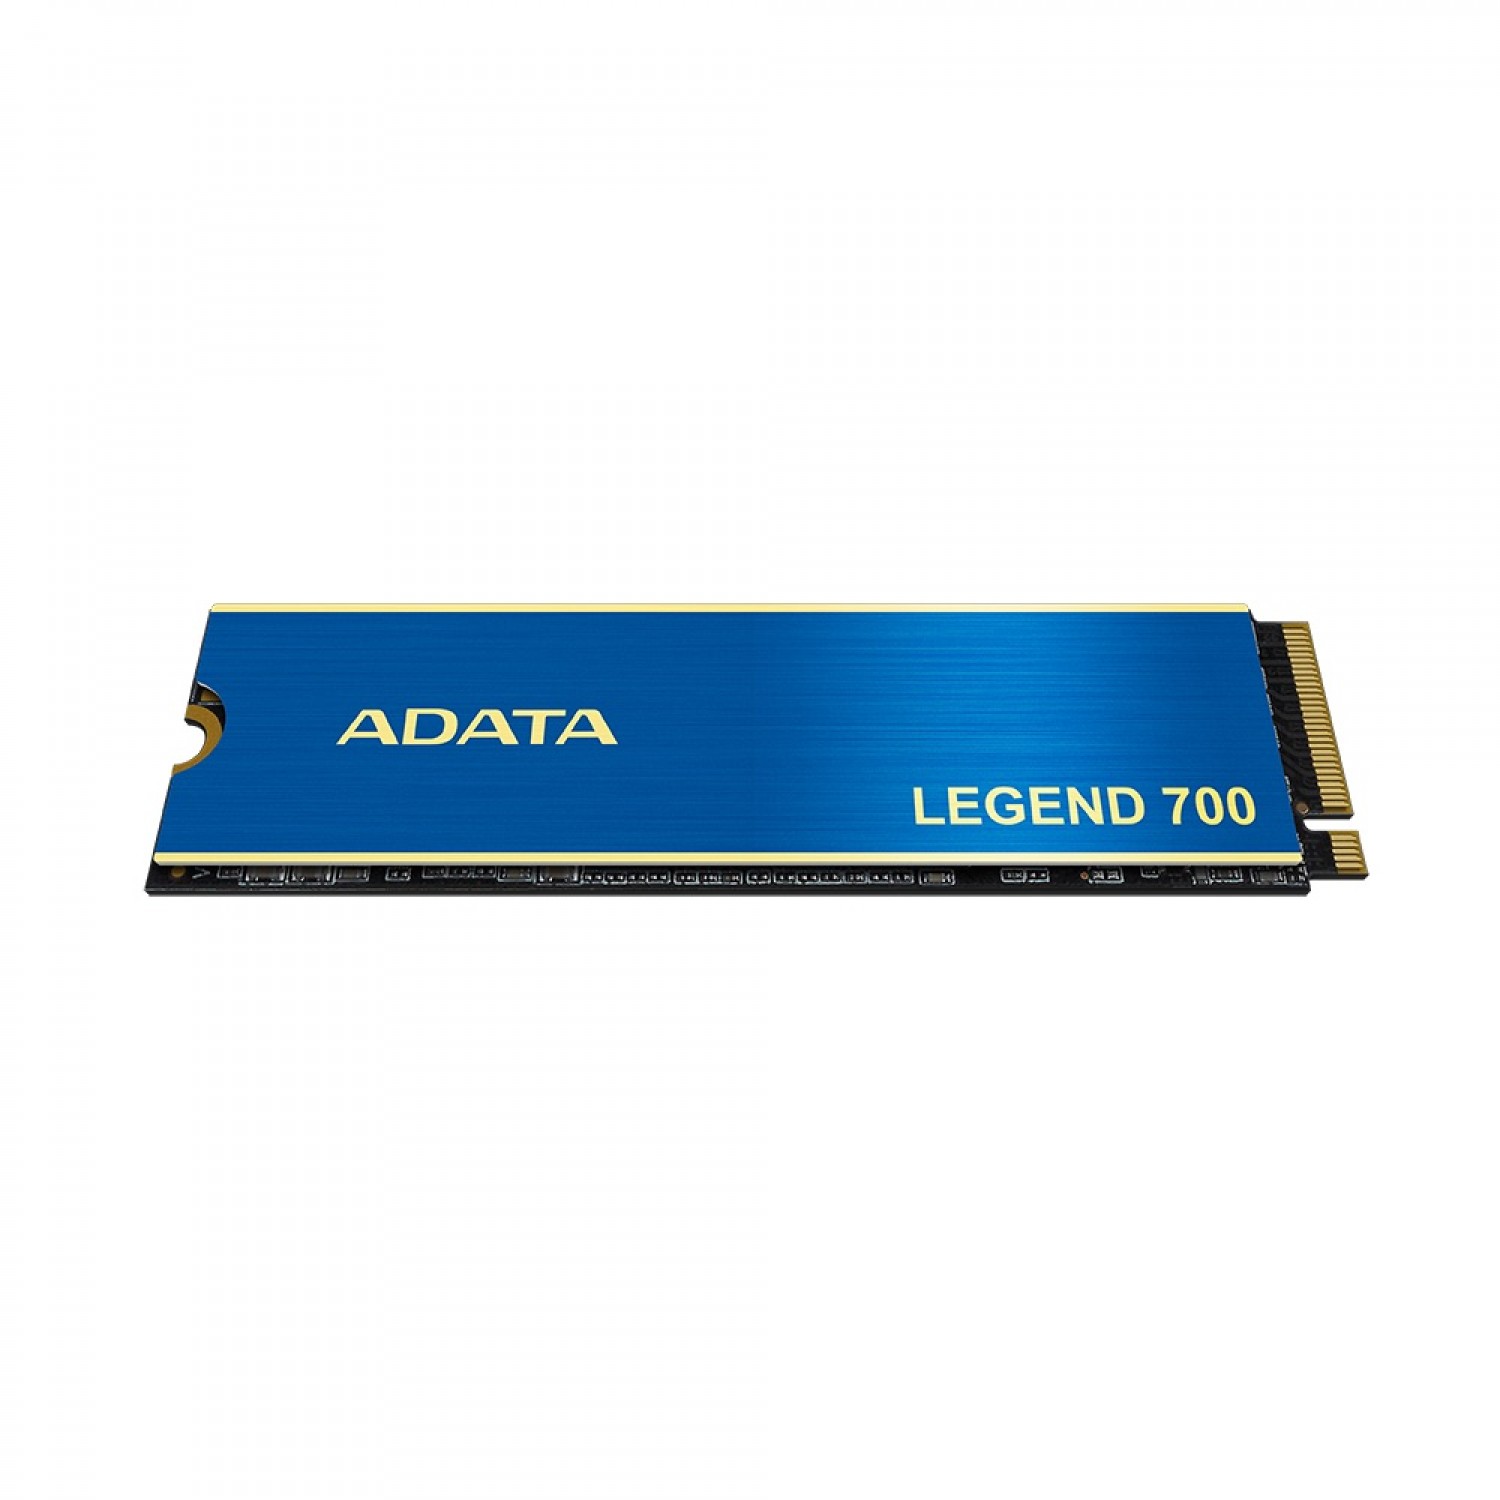 حافظه اس اس دی ADATA Legend 700 512GB-1